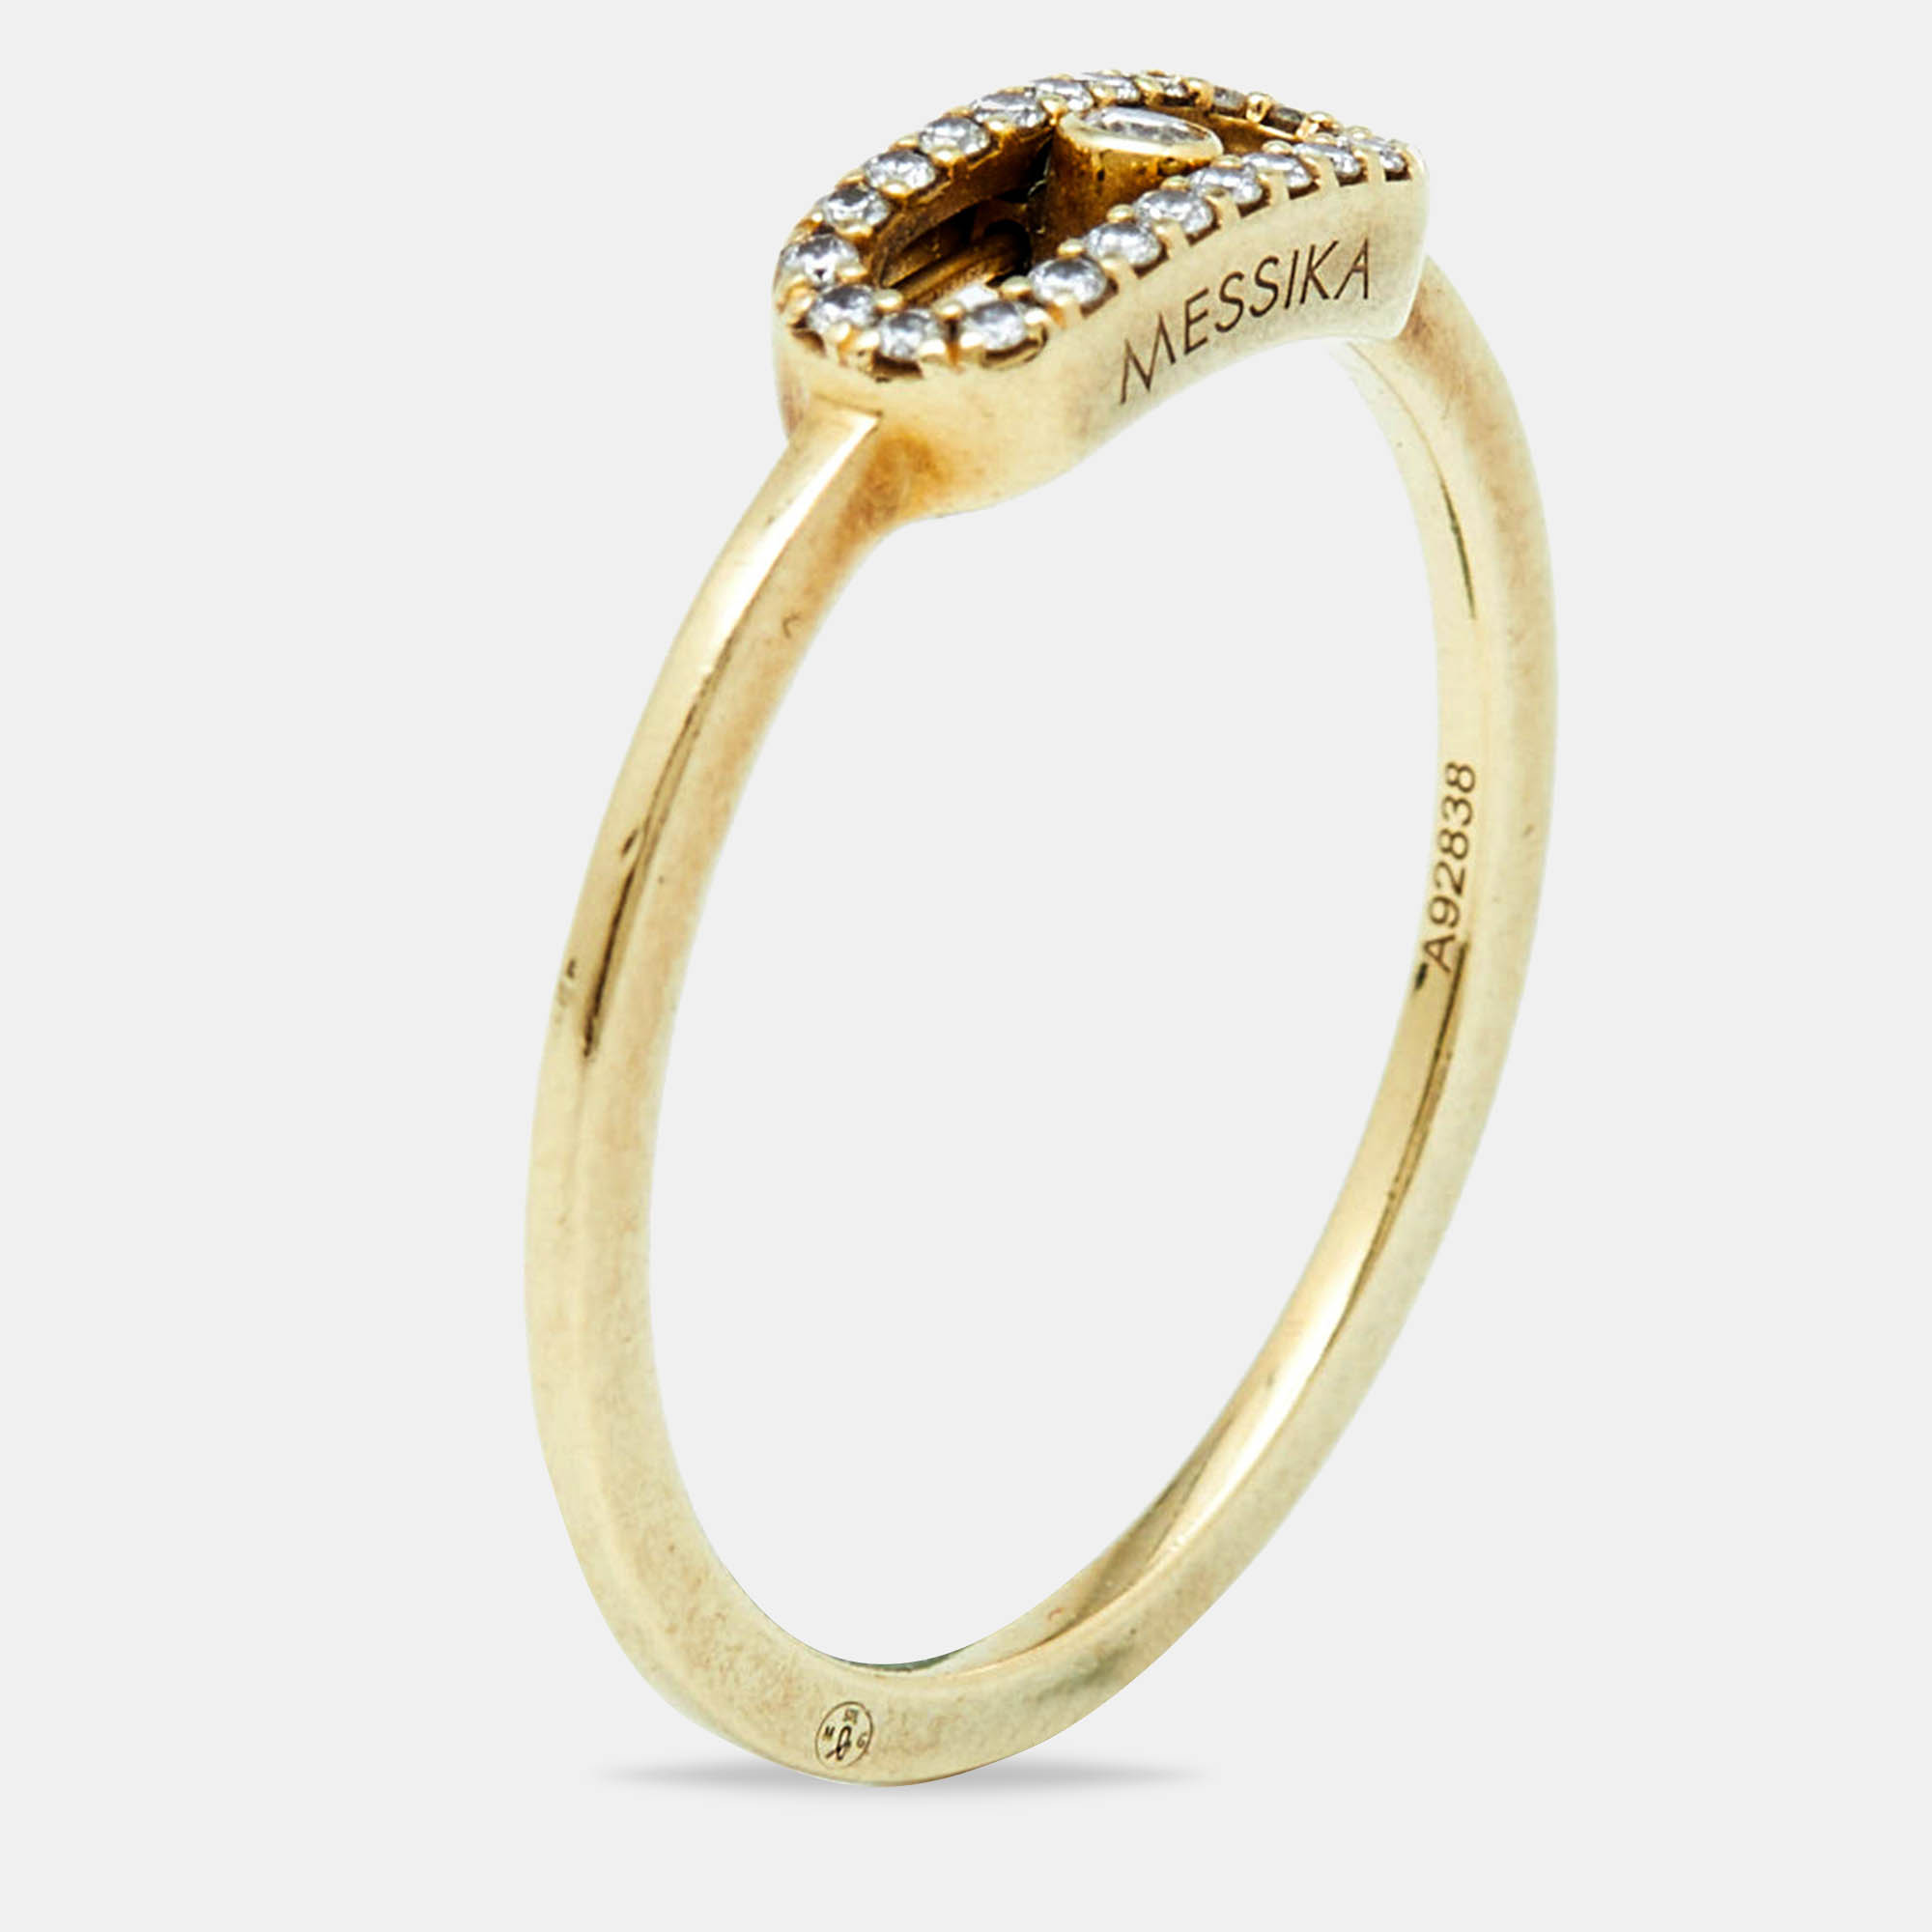 Messika move uno diamond 18k yellow gold ring size 53